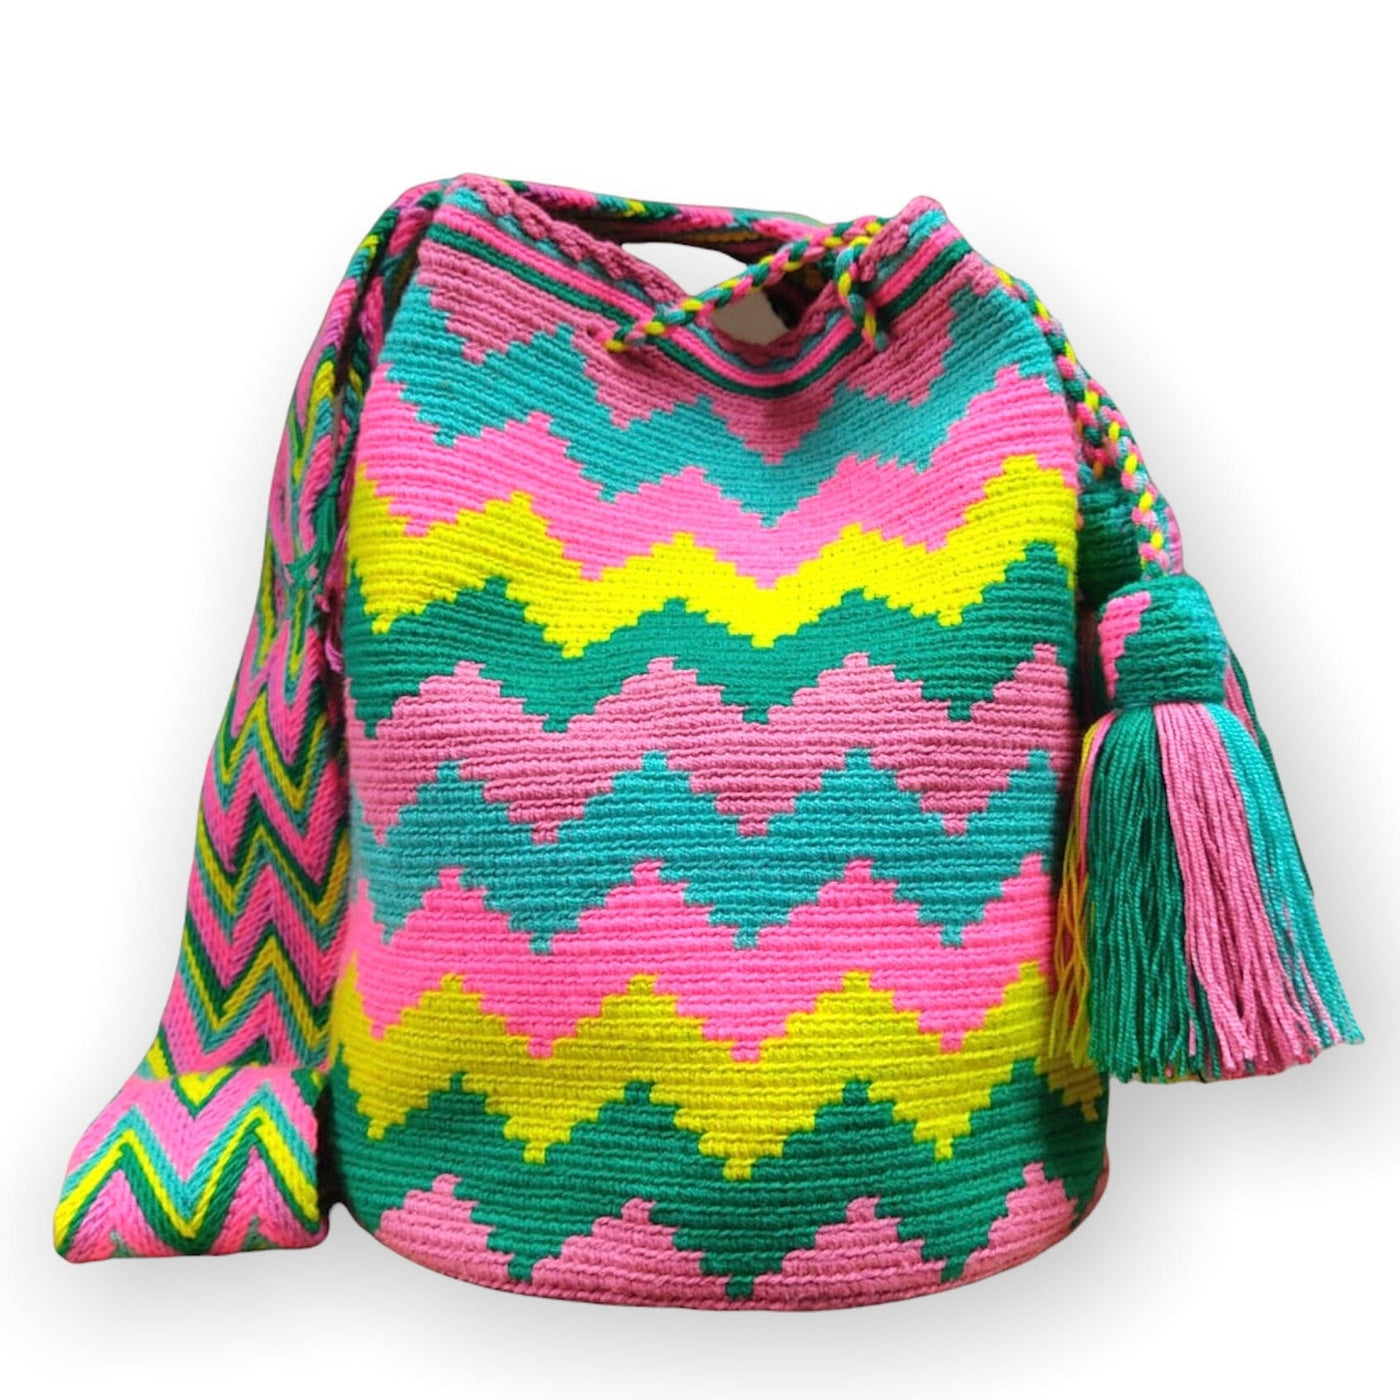 Chevron Crossbody Summer Bag | Boho Beach Bag | Crochet Bag | Colorful 4U